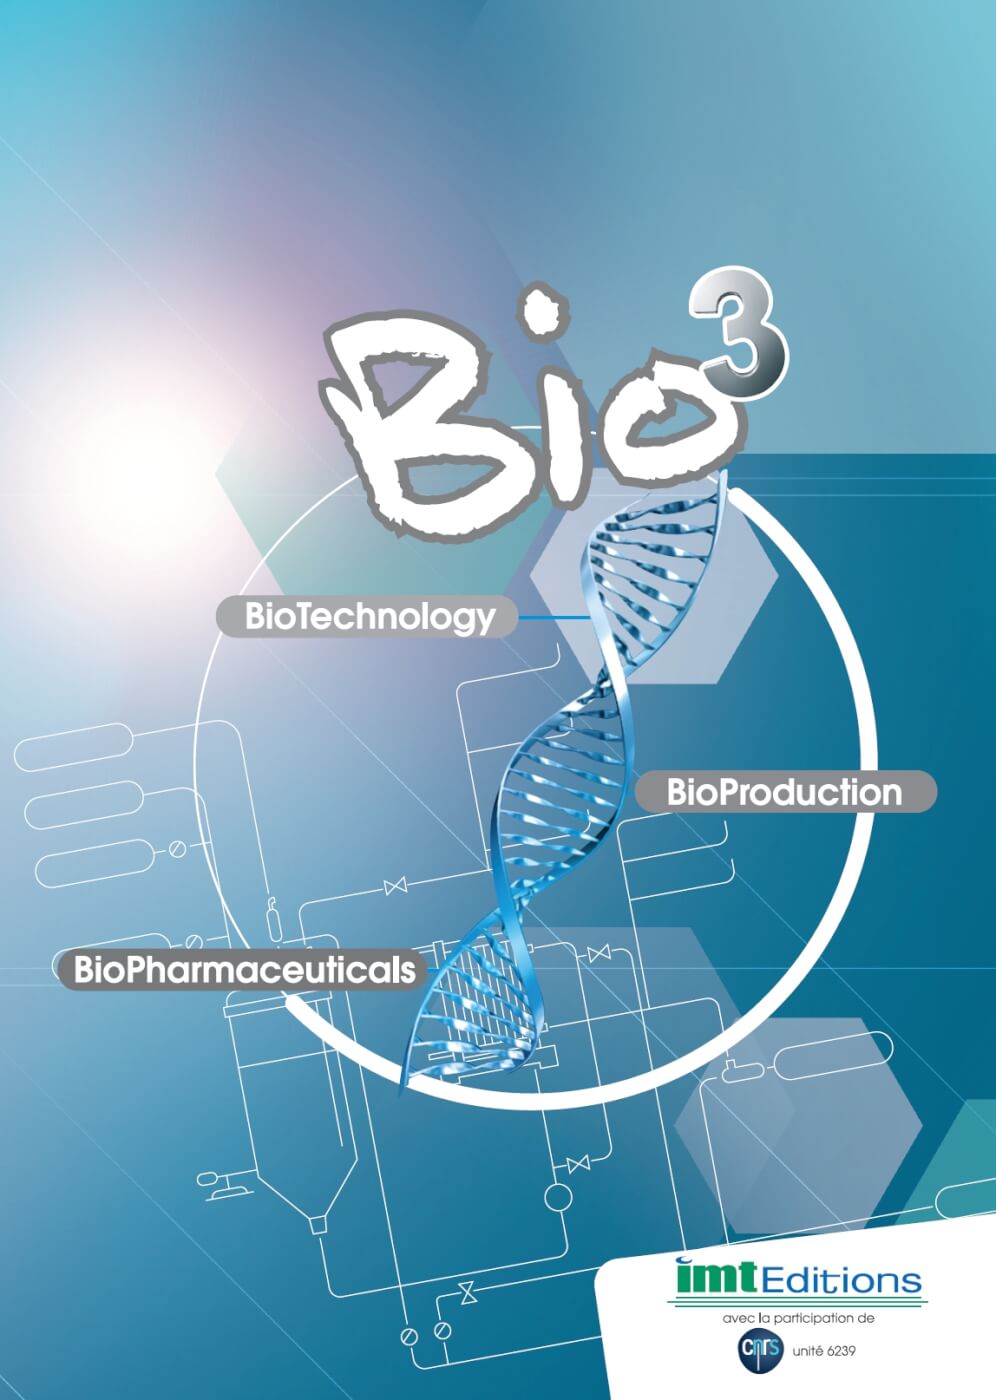 Bio3 : BioTechnology - BioProduction - BioPharmaceuticals